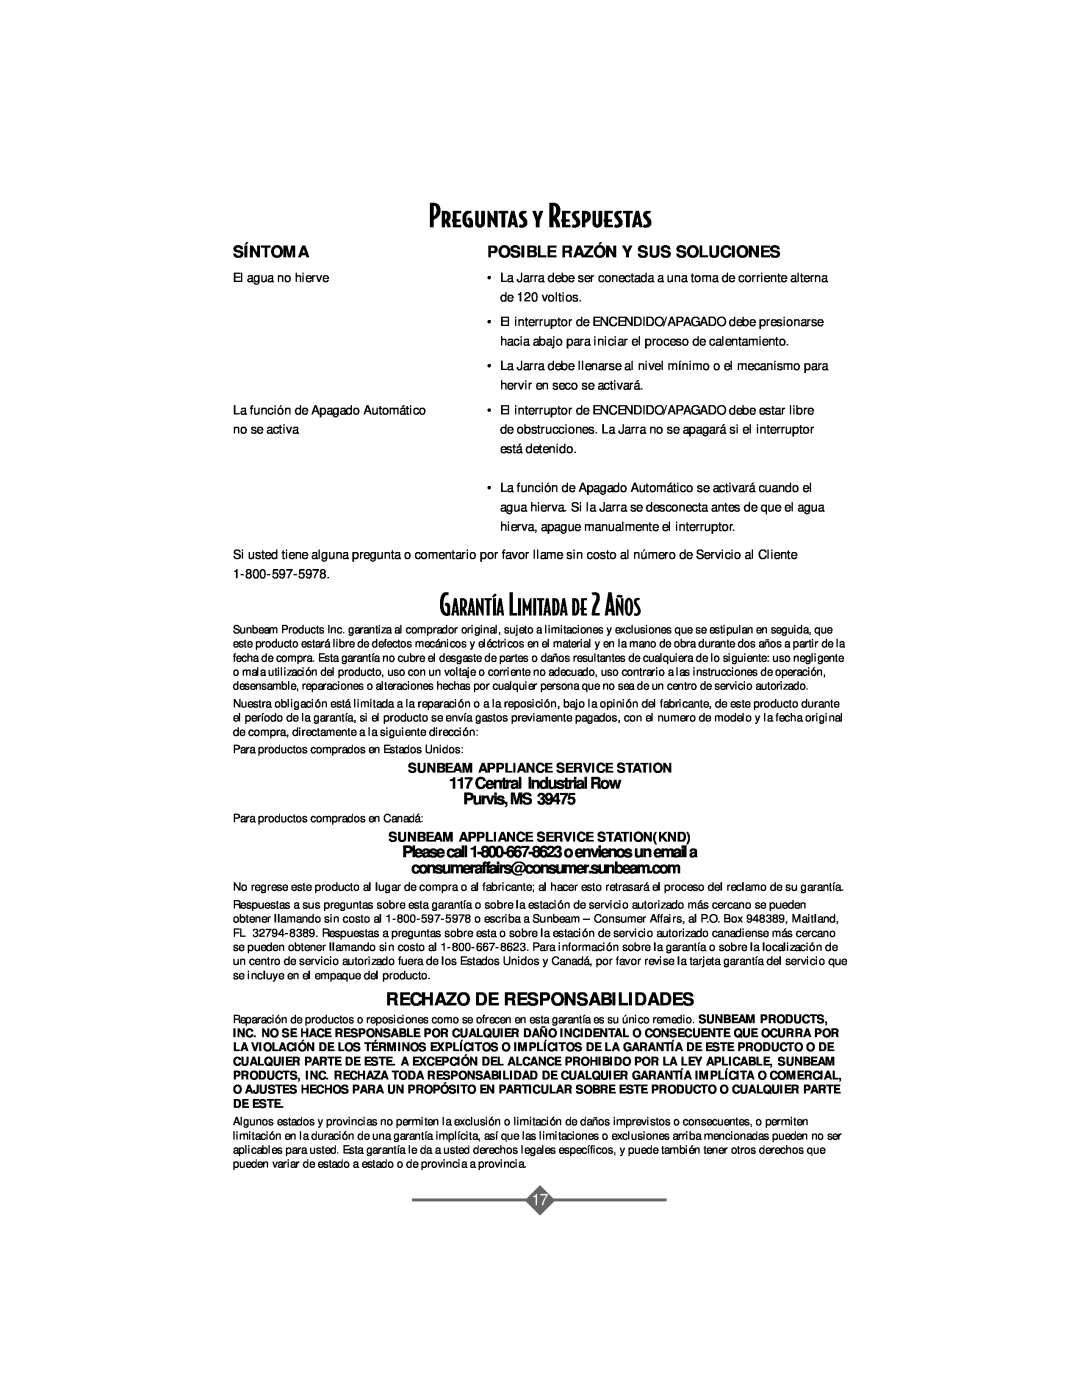 Sunbeam 3208 instruction manual Preguntas y Respuestas, GARANTêA LIMITADA DE 2 A„OS, Rechazo De Responsabilidades, Síntoma 